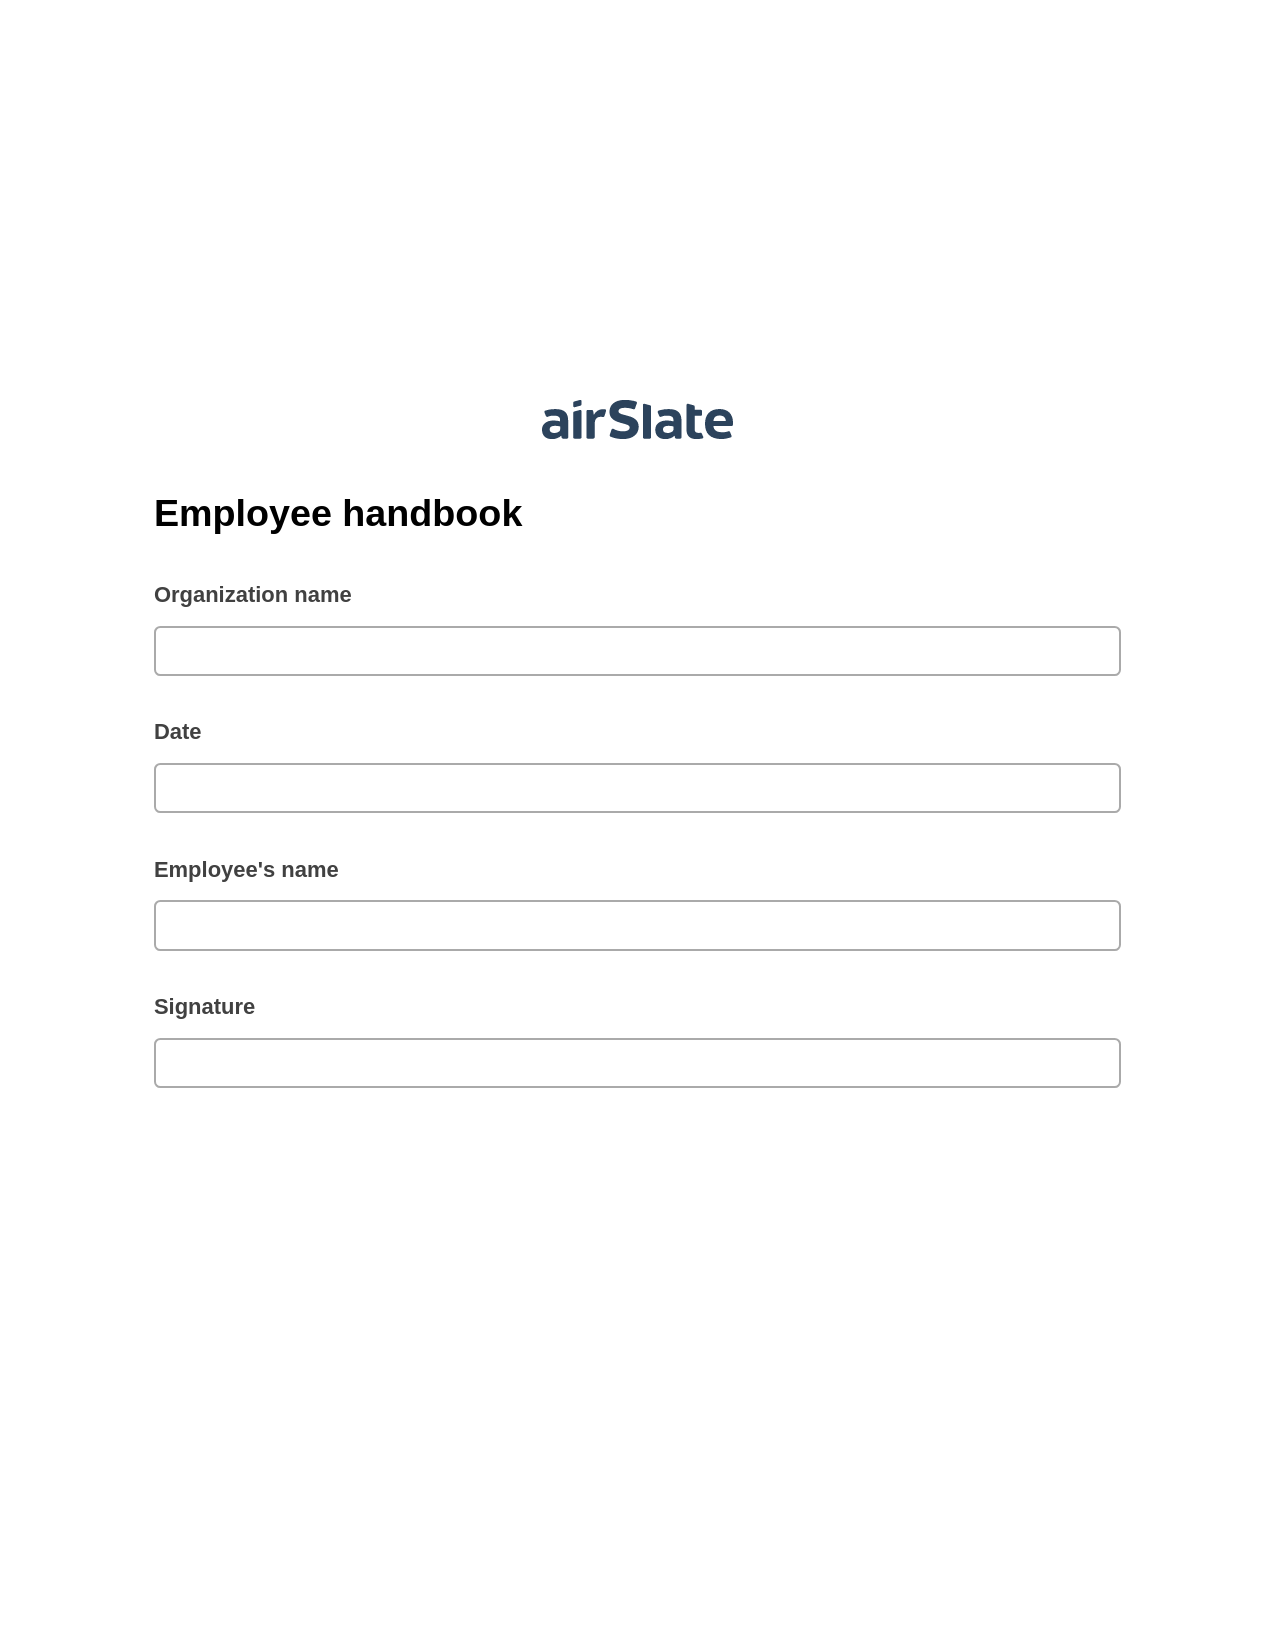 Multirole Employee handbook Pre-fill from Excel Spreadsheet Bot, Update Salesforce Record Bot, Export to Google Sheet Bot